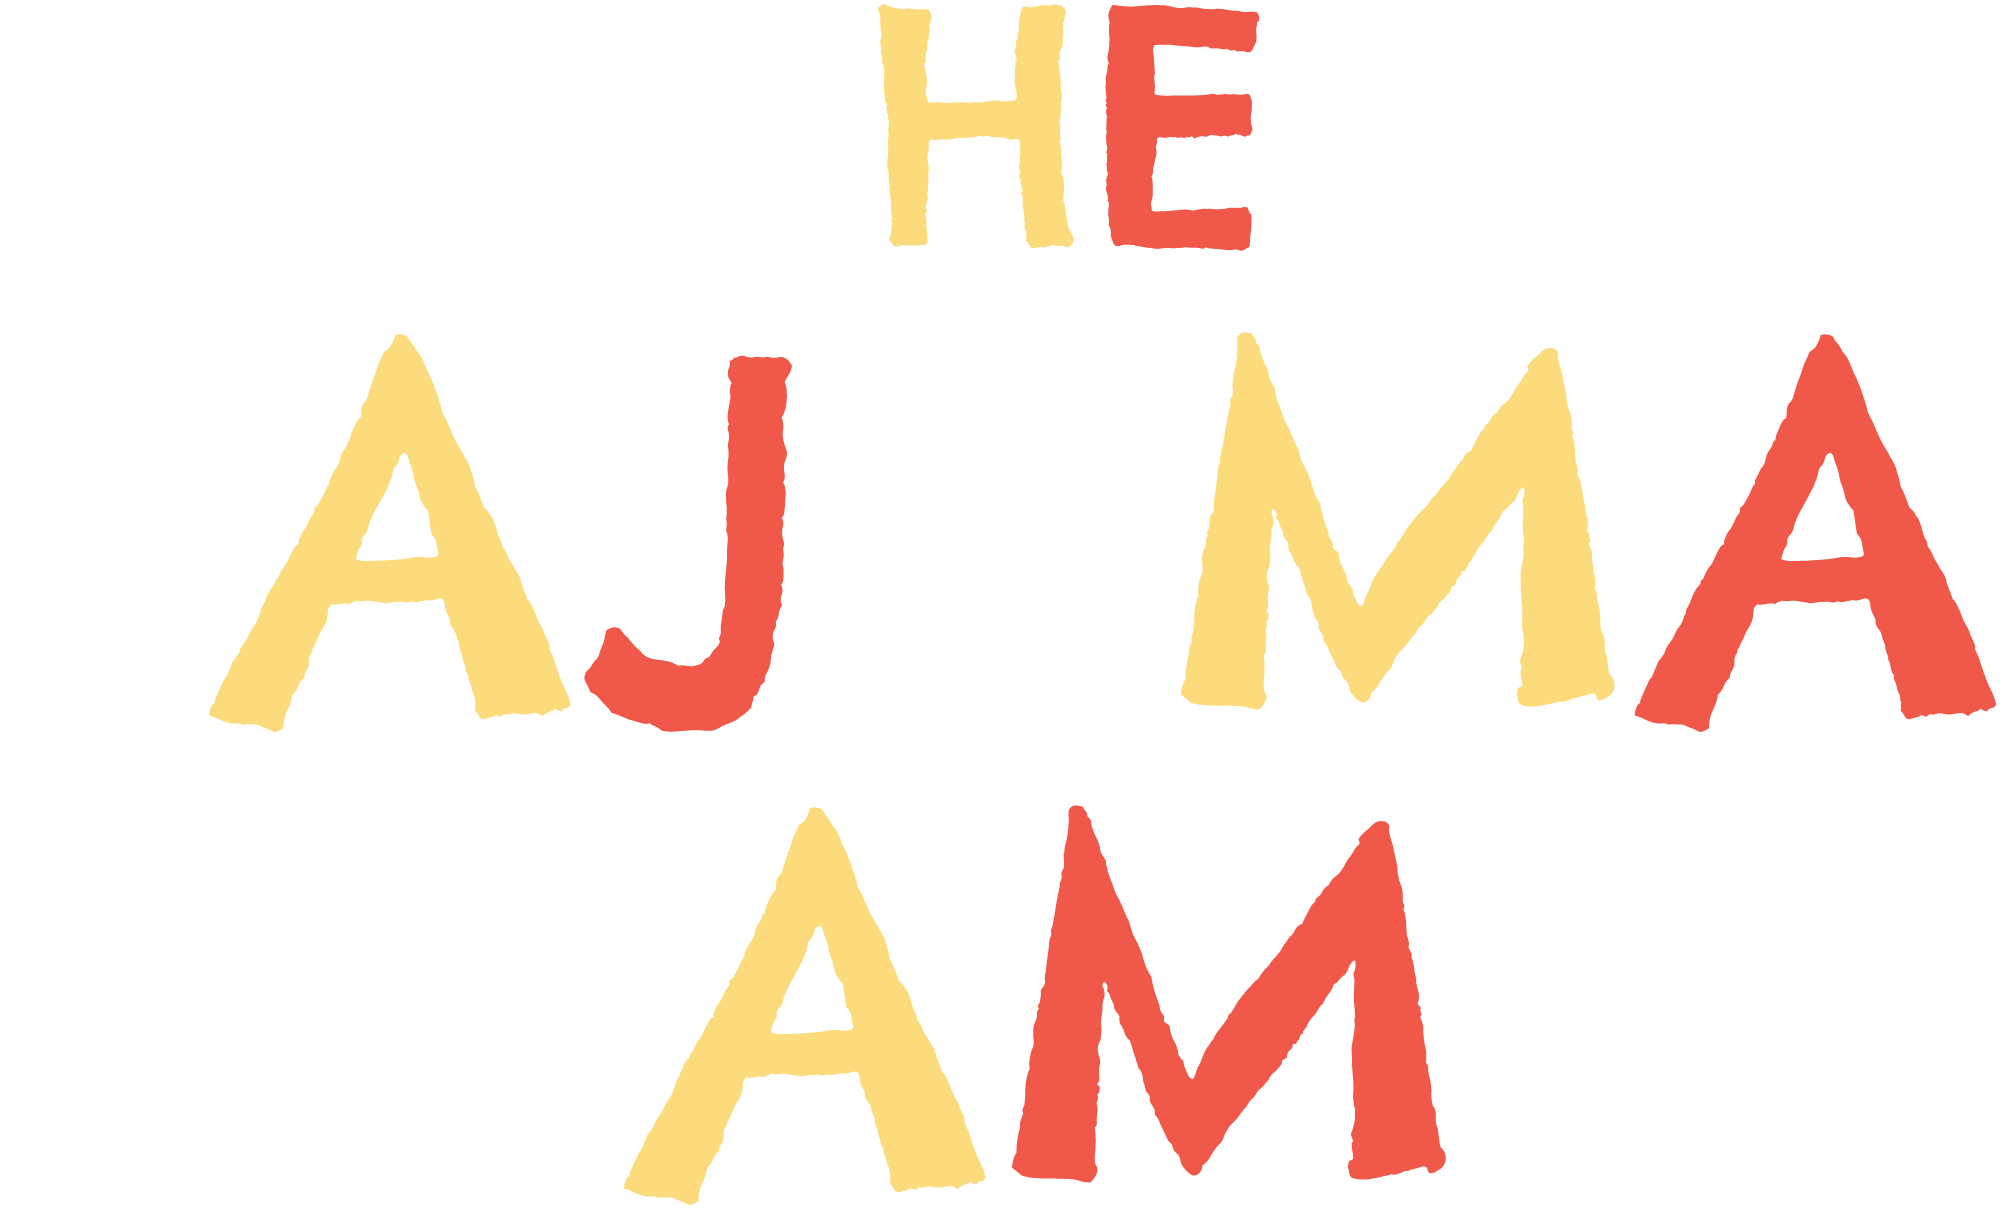 The Pajama Game title card